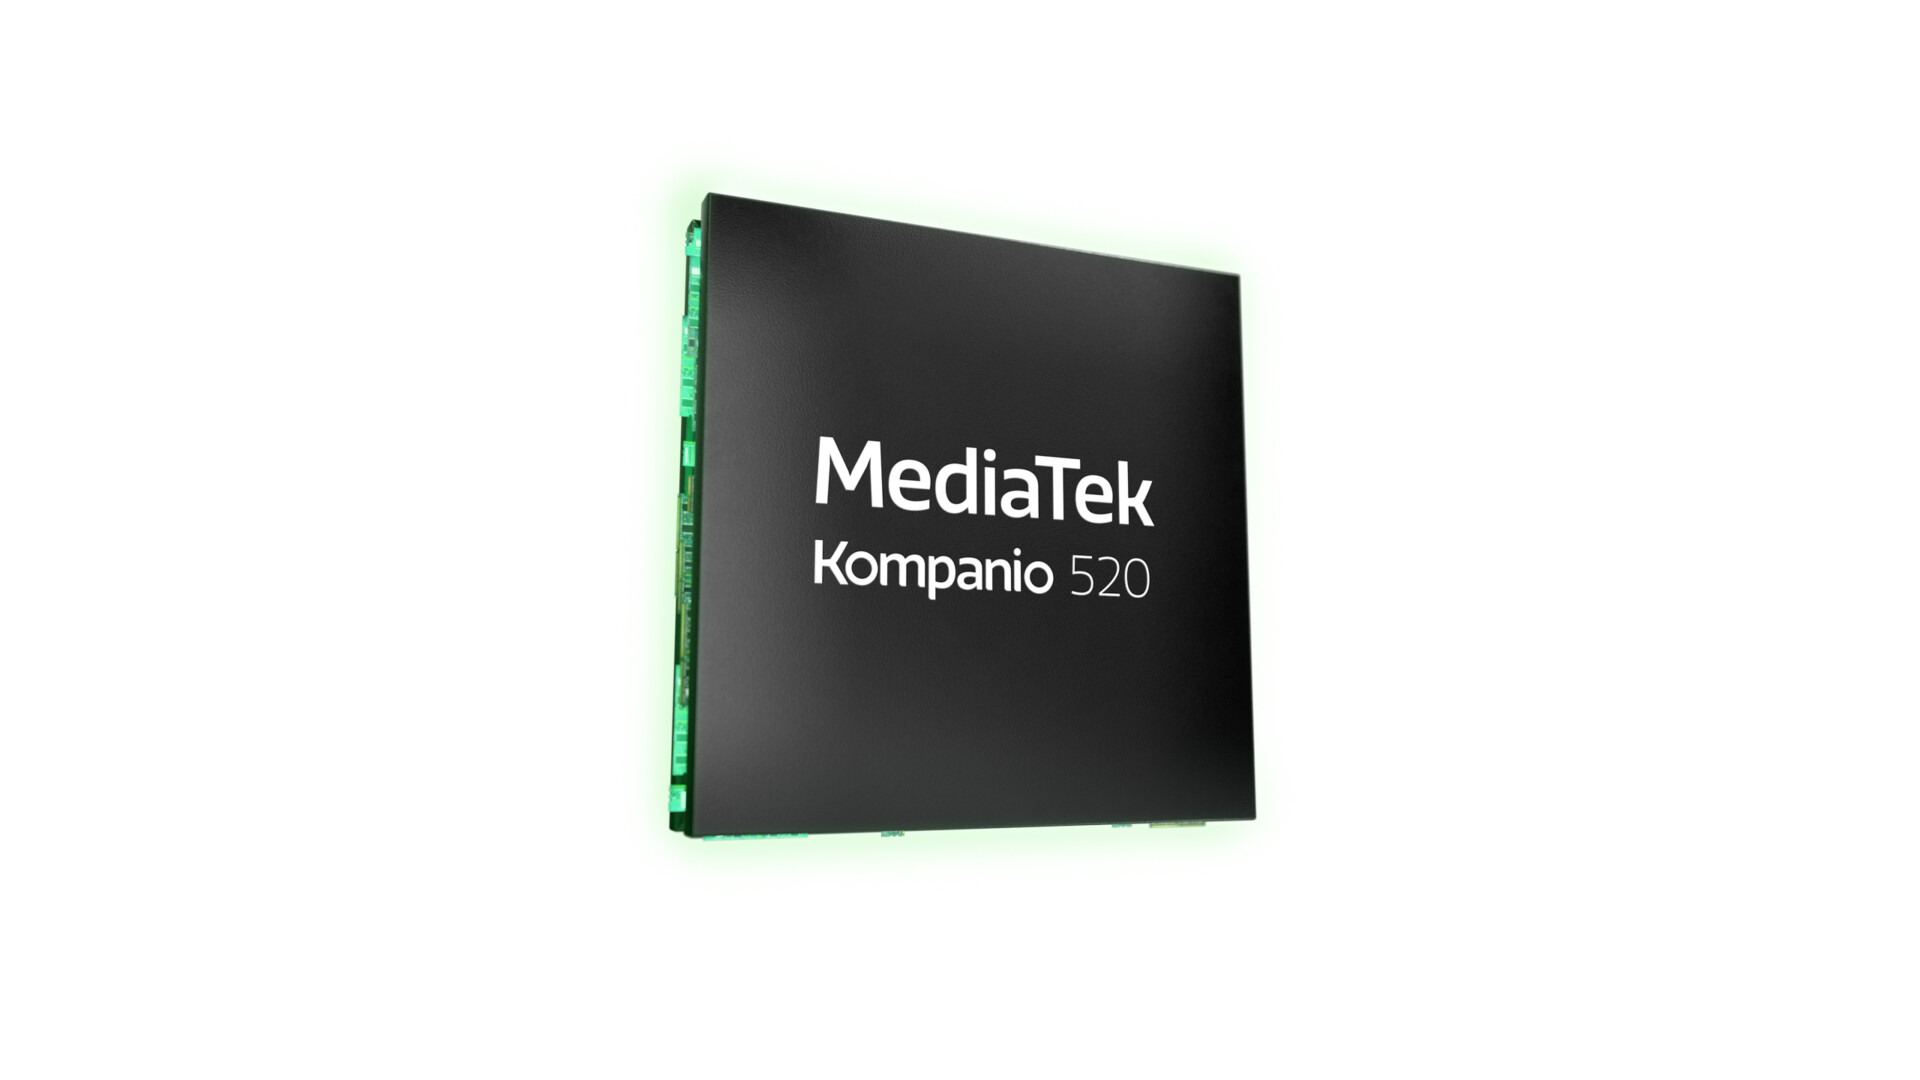 MediaTek ra mắt bộ đôi chipset Kompanio 520 và Kompanio 528 cho các máy Chromebook